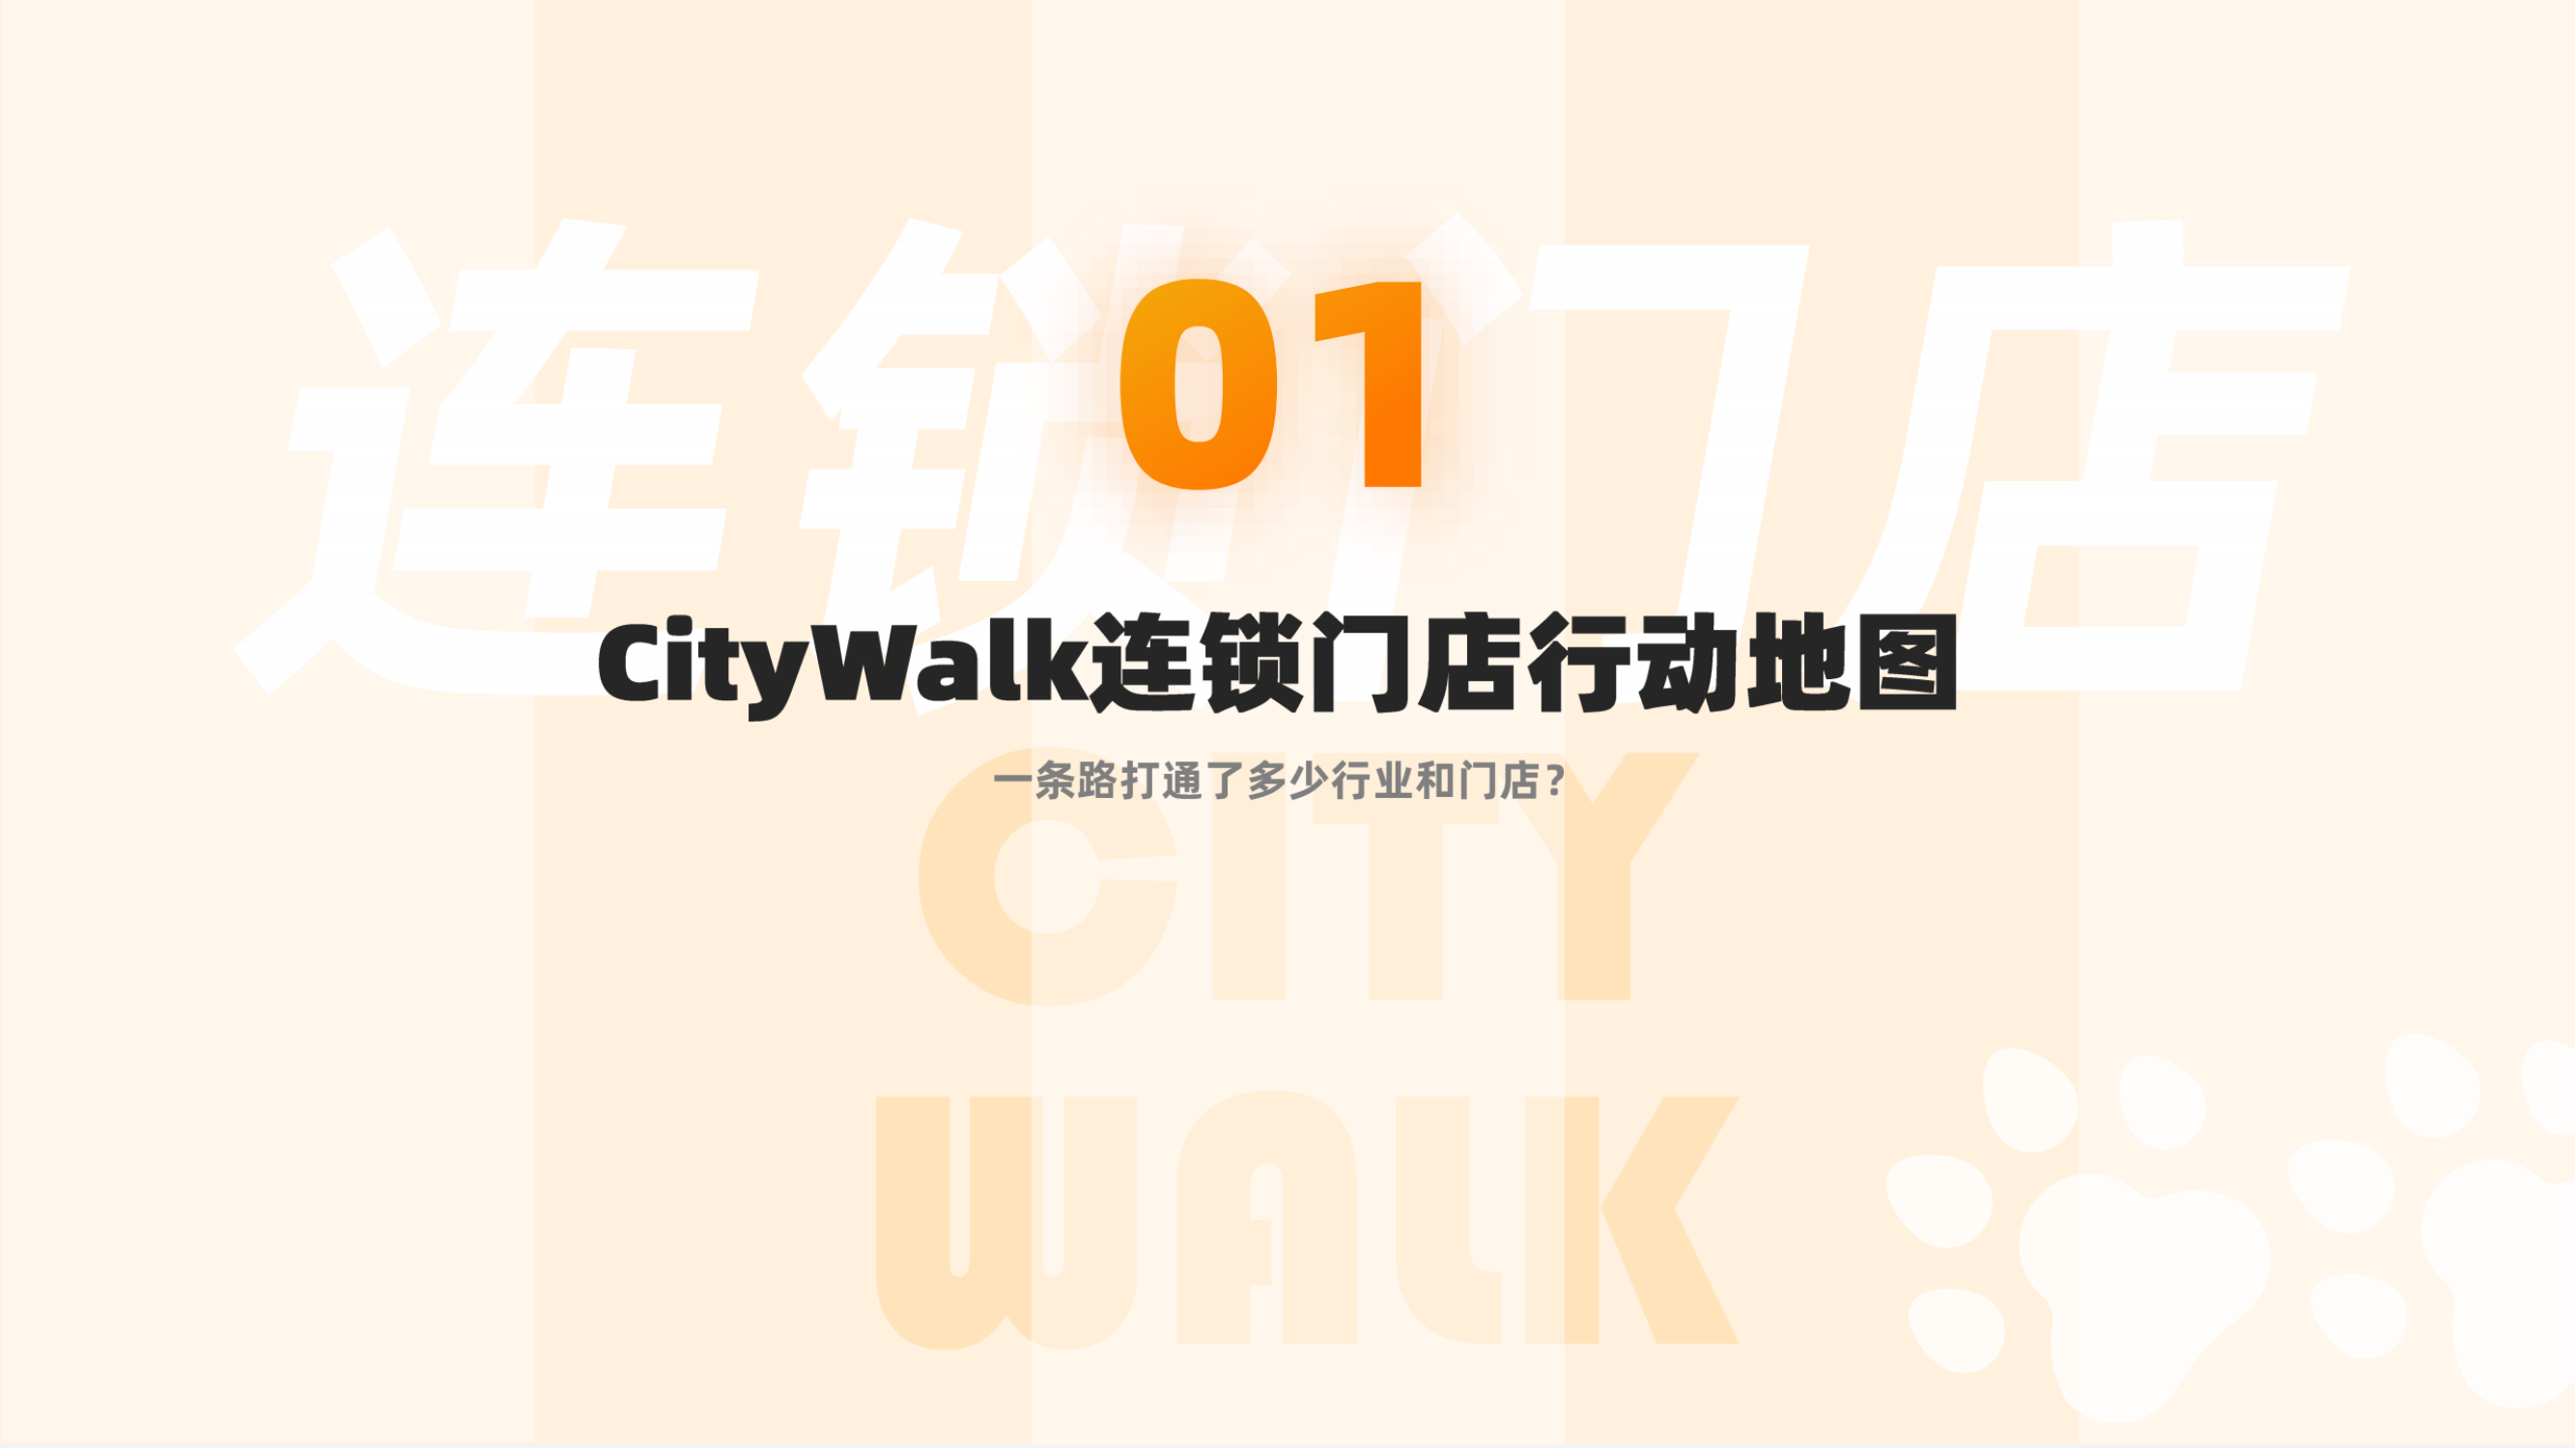 CityWalk本地生活商业价值洞察报告_纯图版_03.png